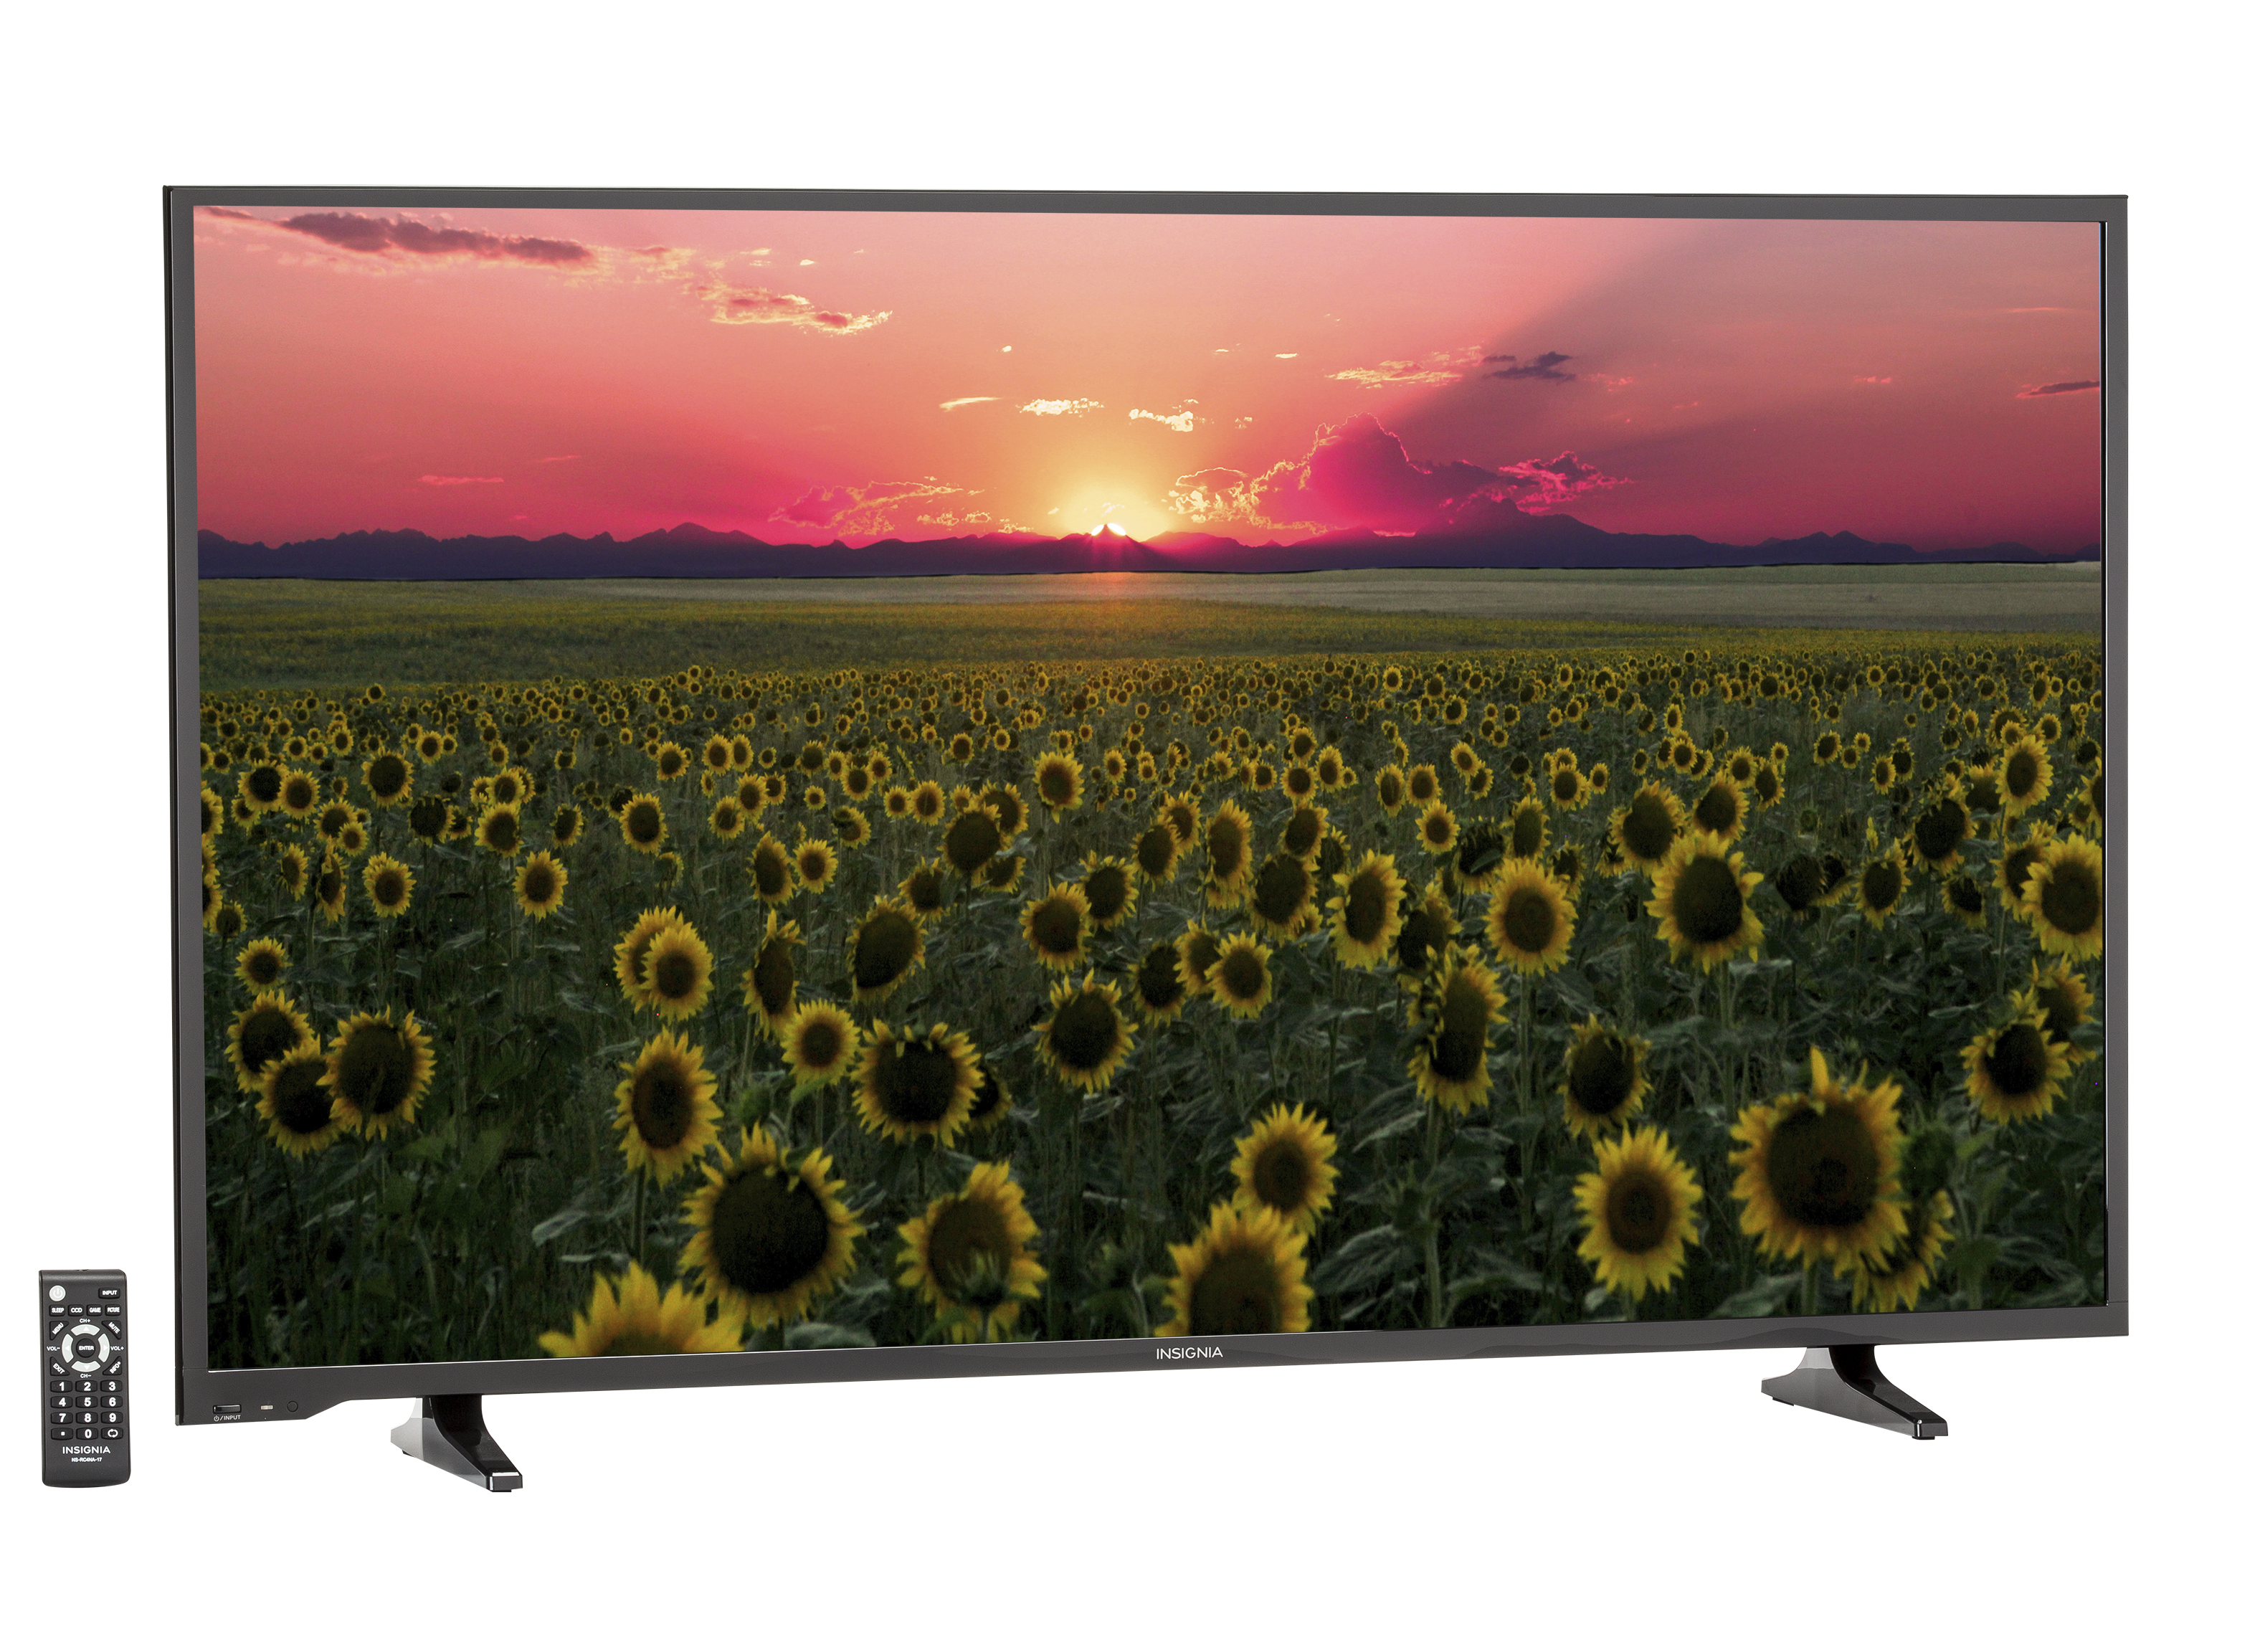 Samsung ue43j5272au. Самсунг 43 j5202. Телевизор Samsung ue43j5272au. Samsung Smart TV 43. Купить телевизор смарт тв 43 дюймов лучший